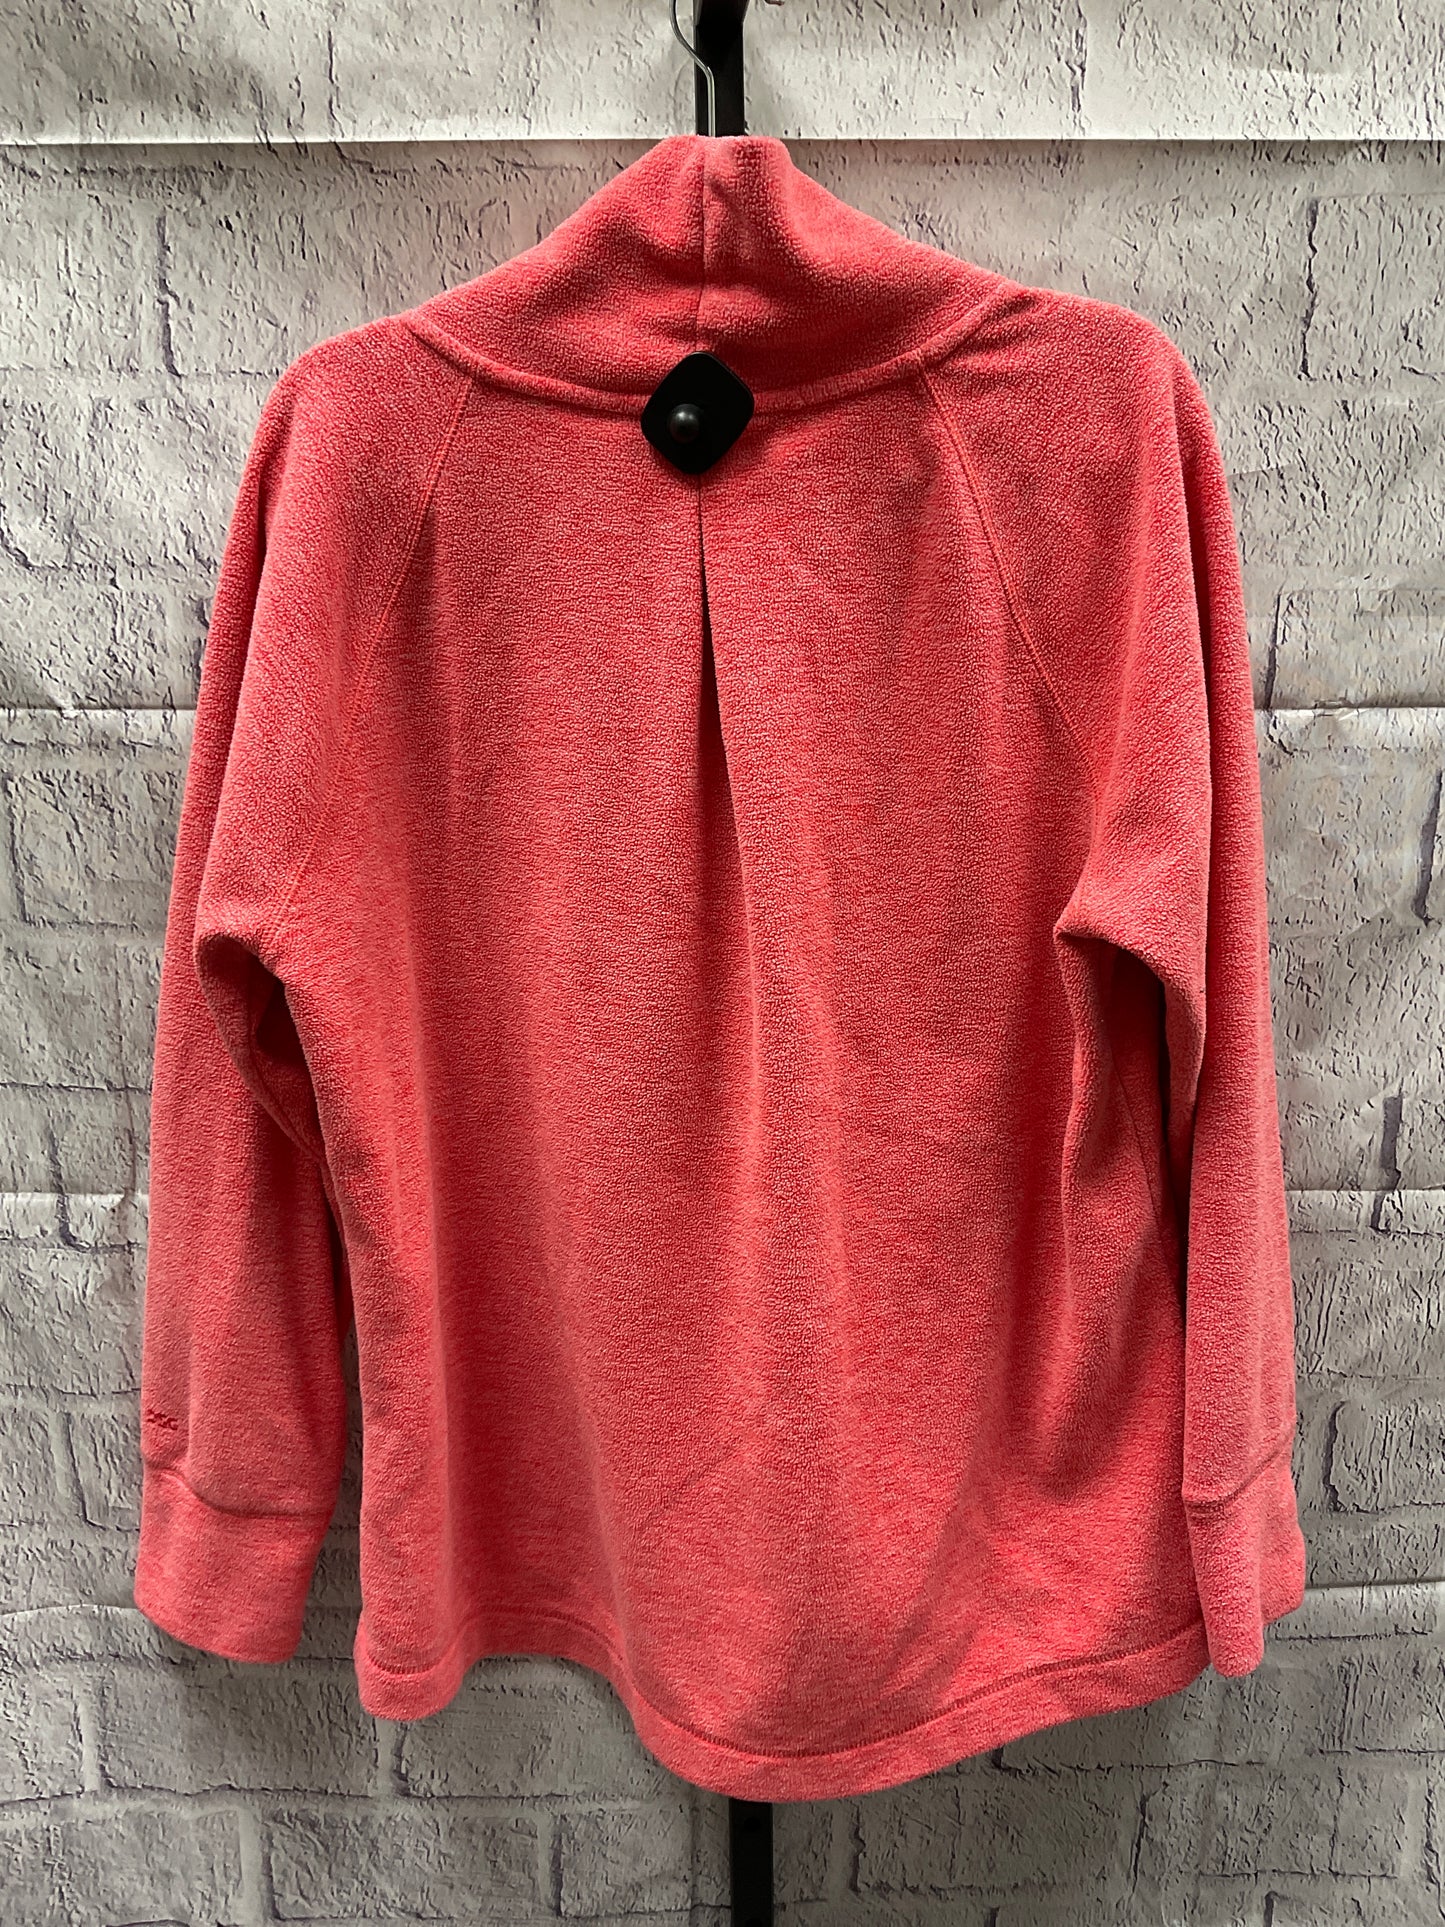 Athletic Sweatshirt Crewneck By Dsg Outerwear  Size: Xxl